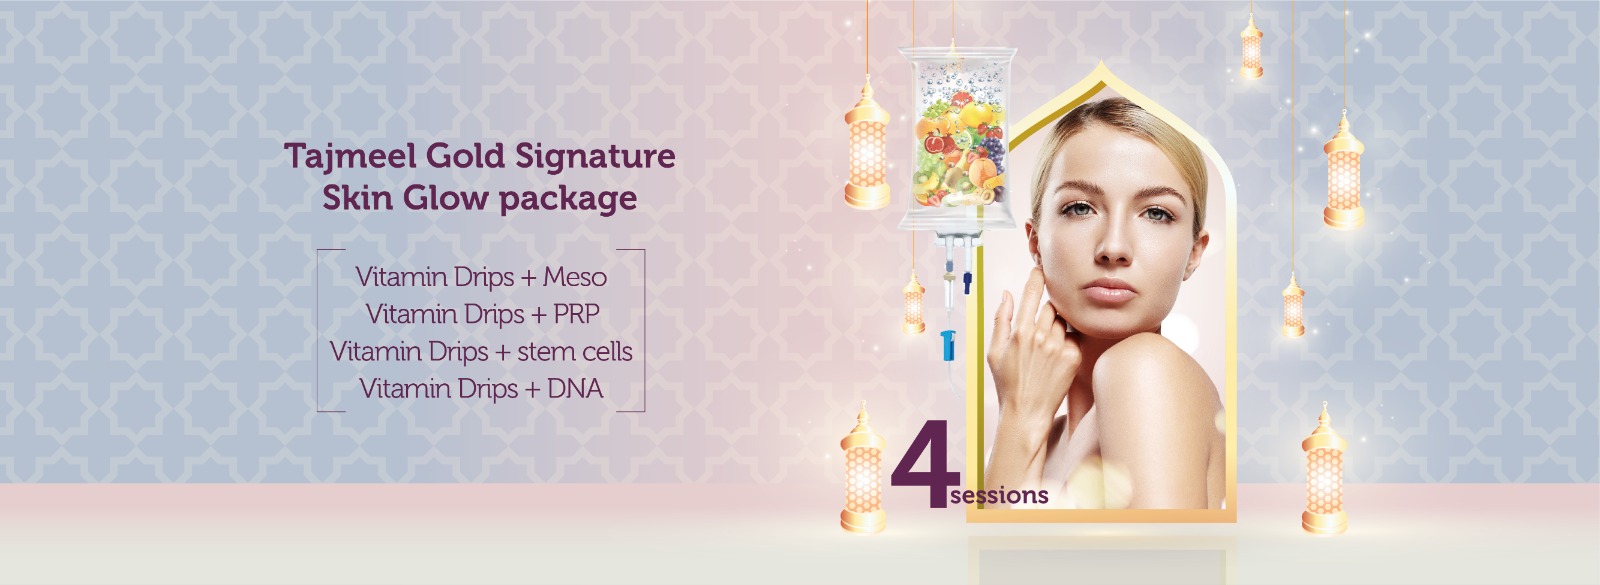 Tajmeel Gold Signature Skin Glow Package – AED 7,499